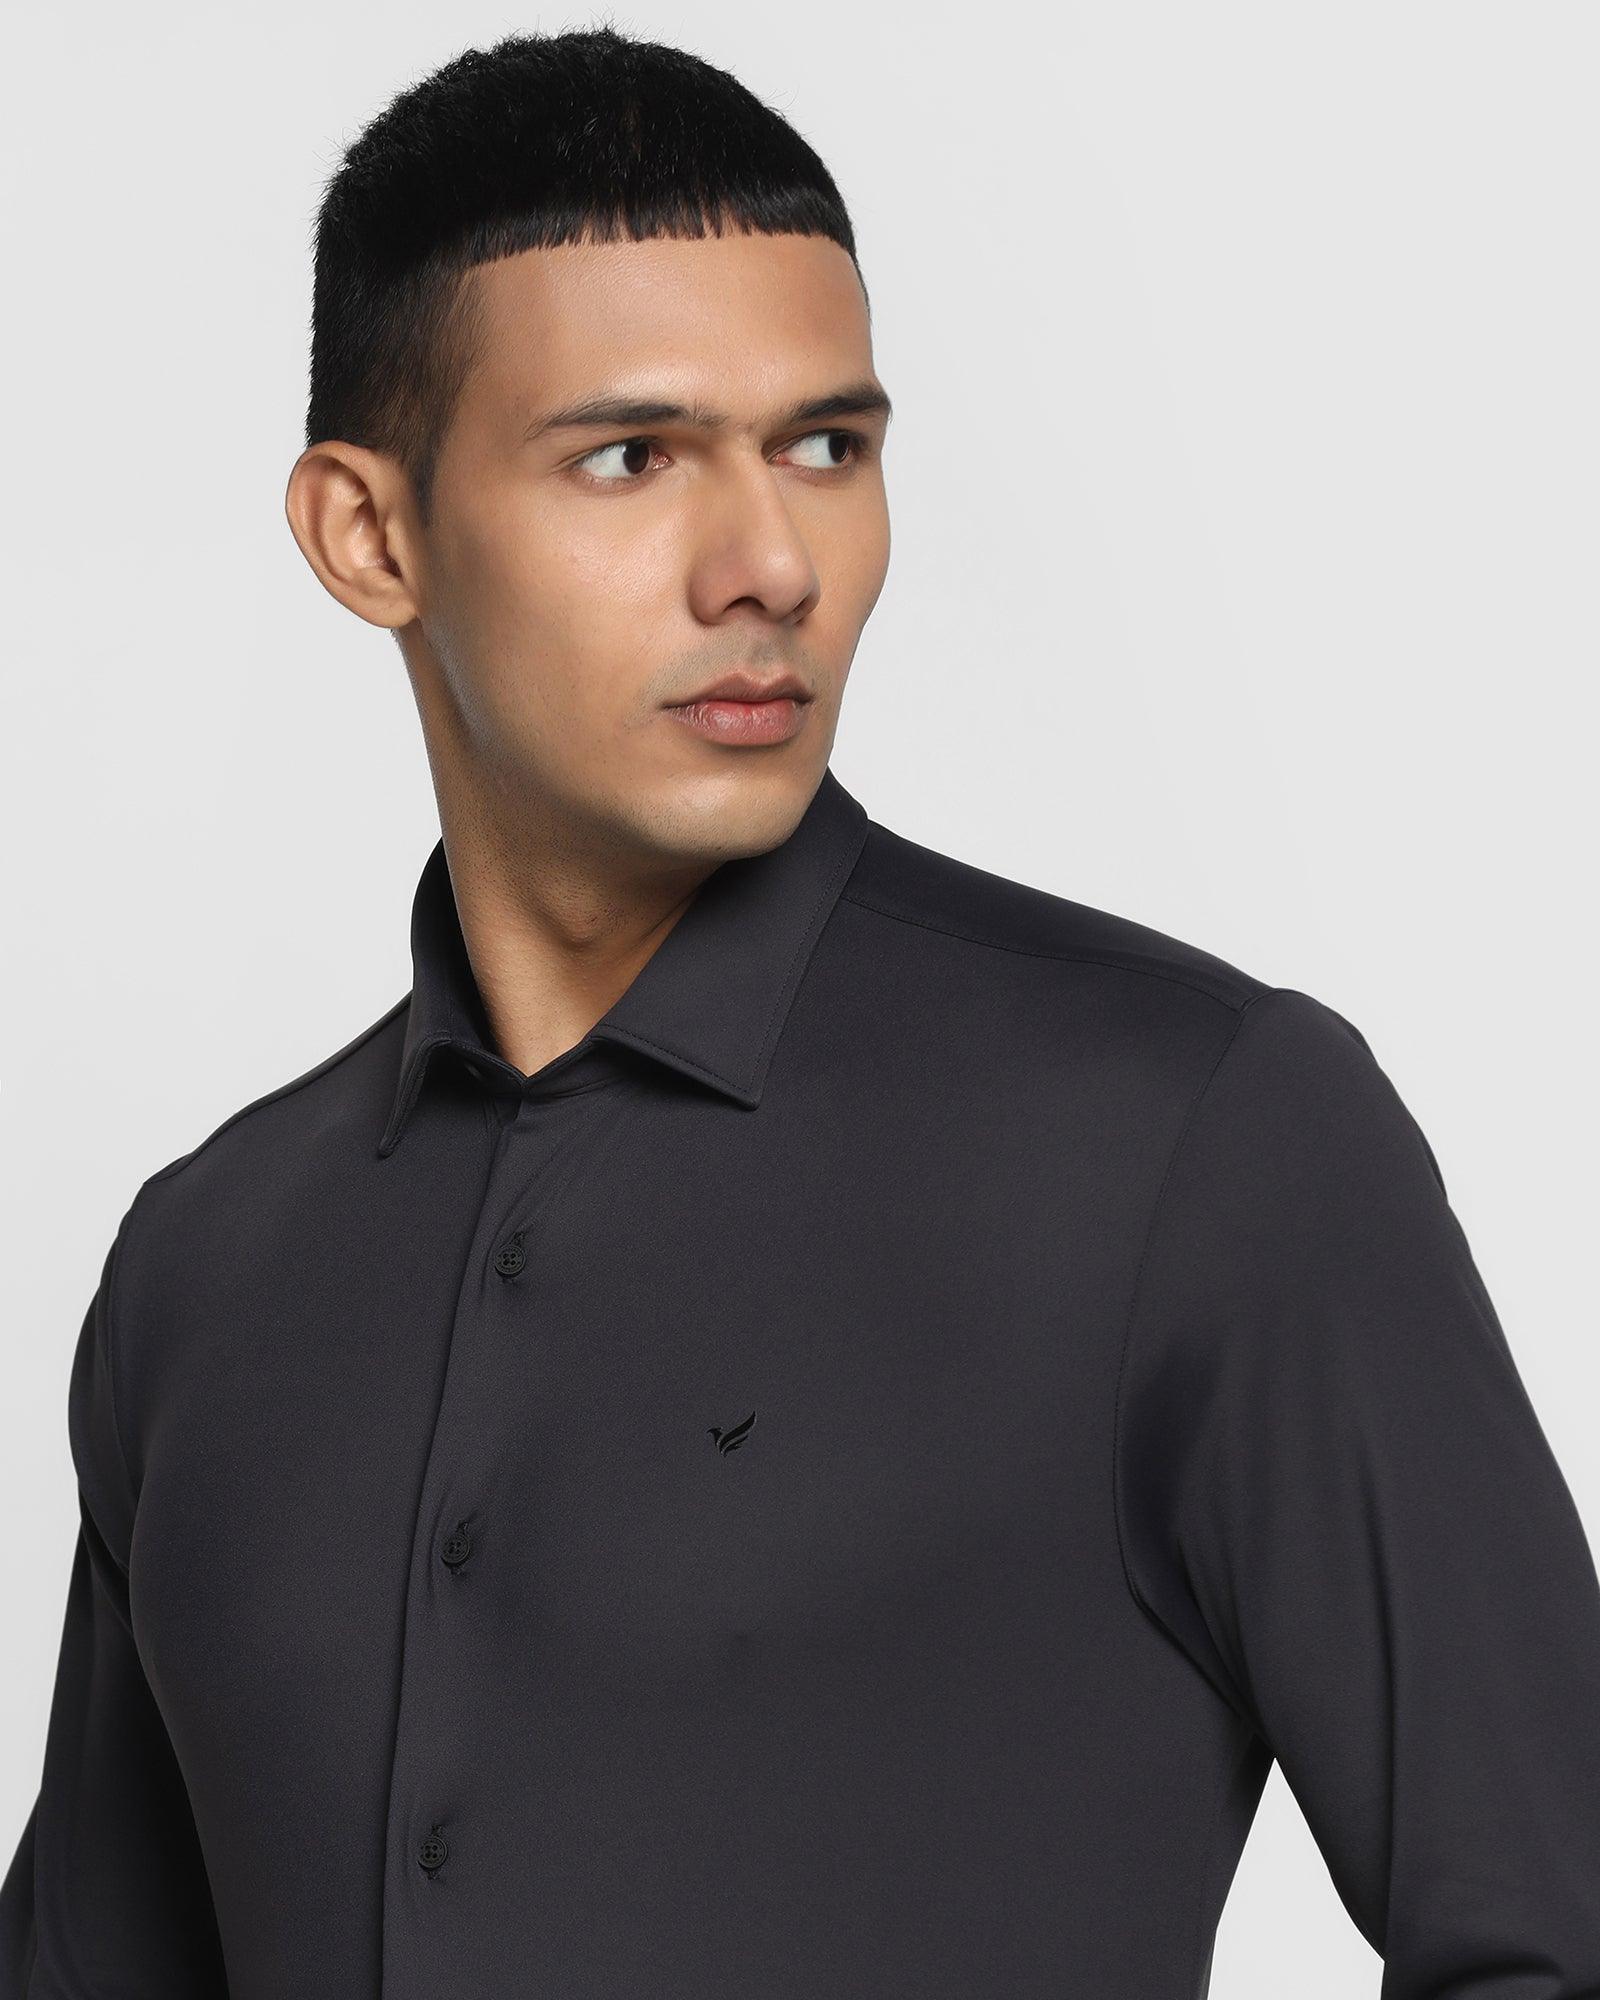 TechPro Formal Black Solid Shirt - Admin